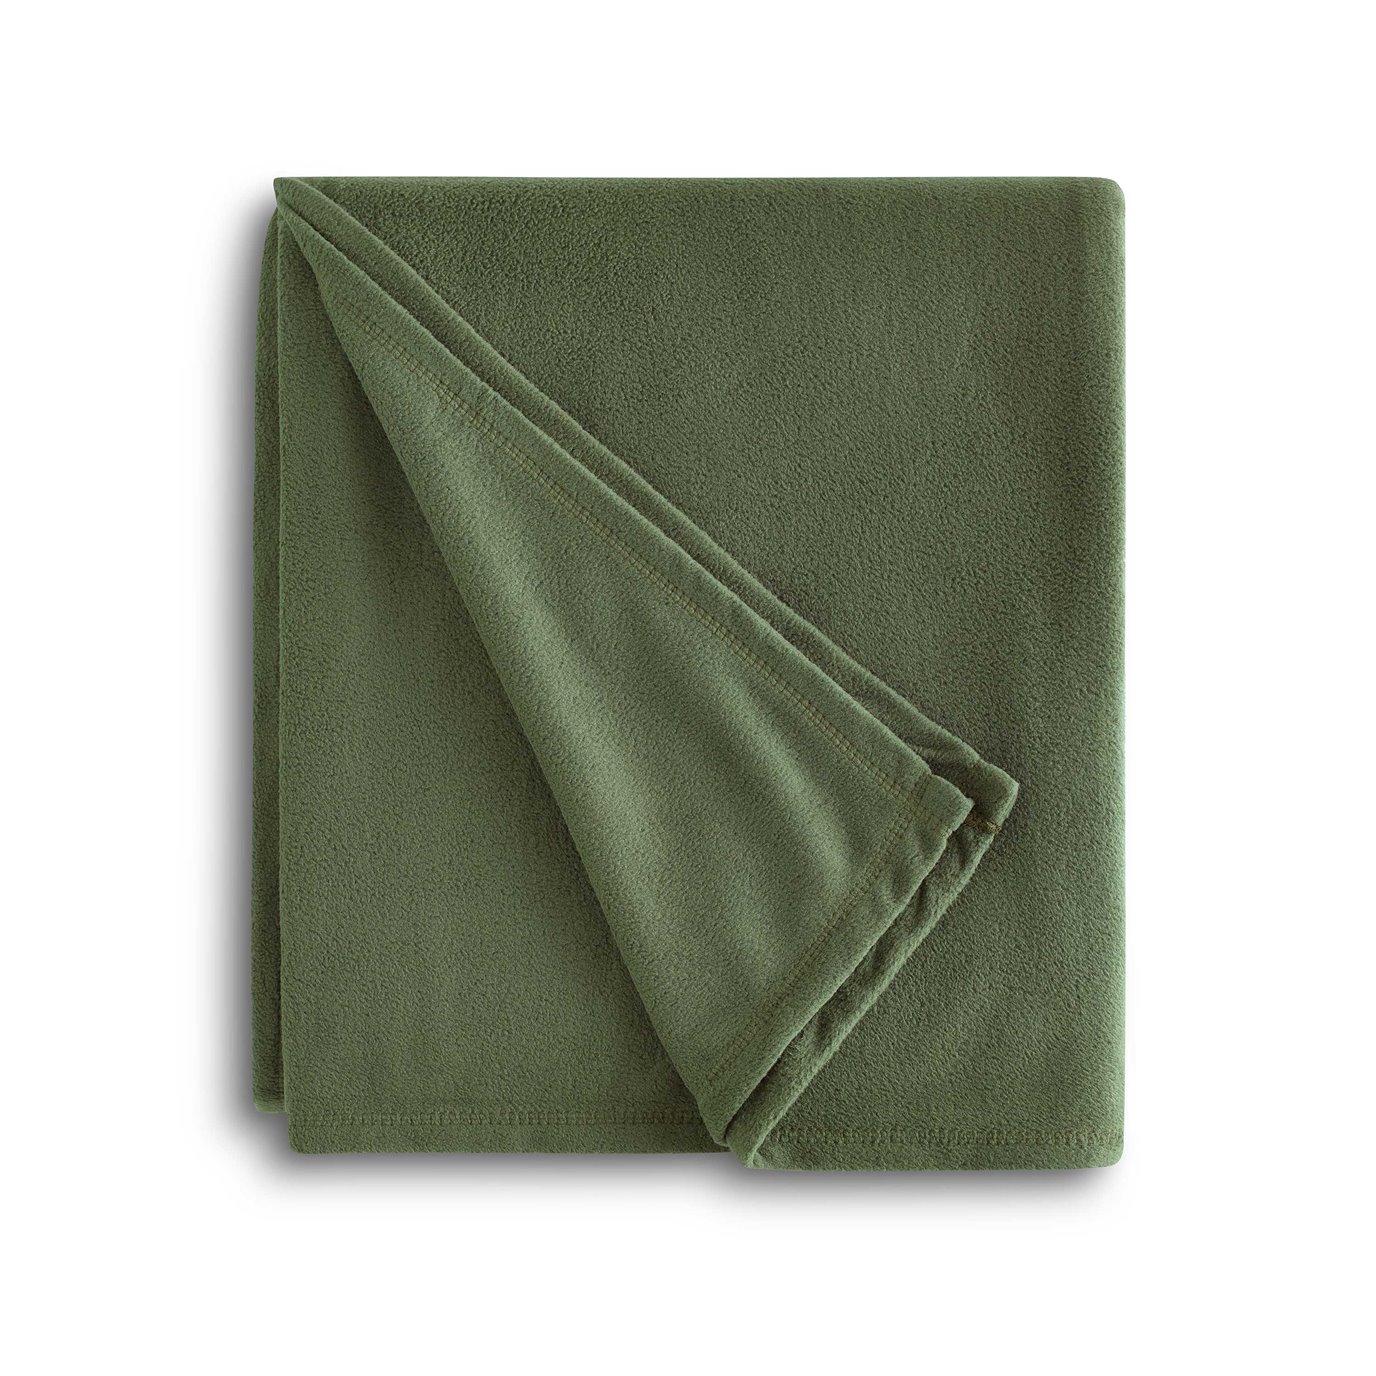 Martex Super Soft Fleece King Basil Blanket by WestPoint Home | PC Fallon